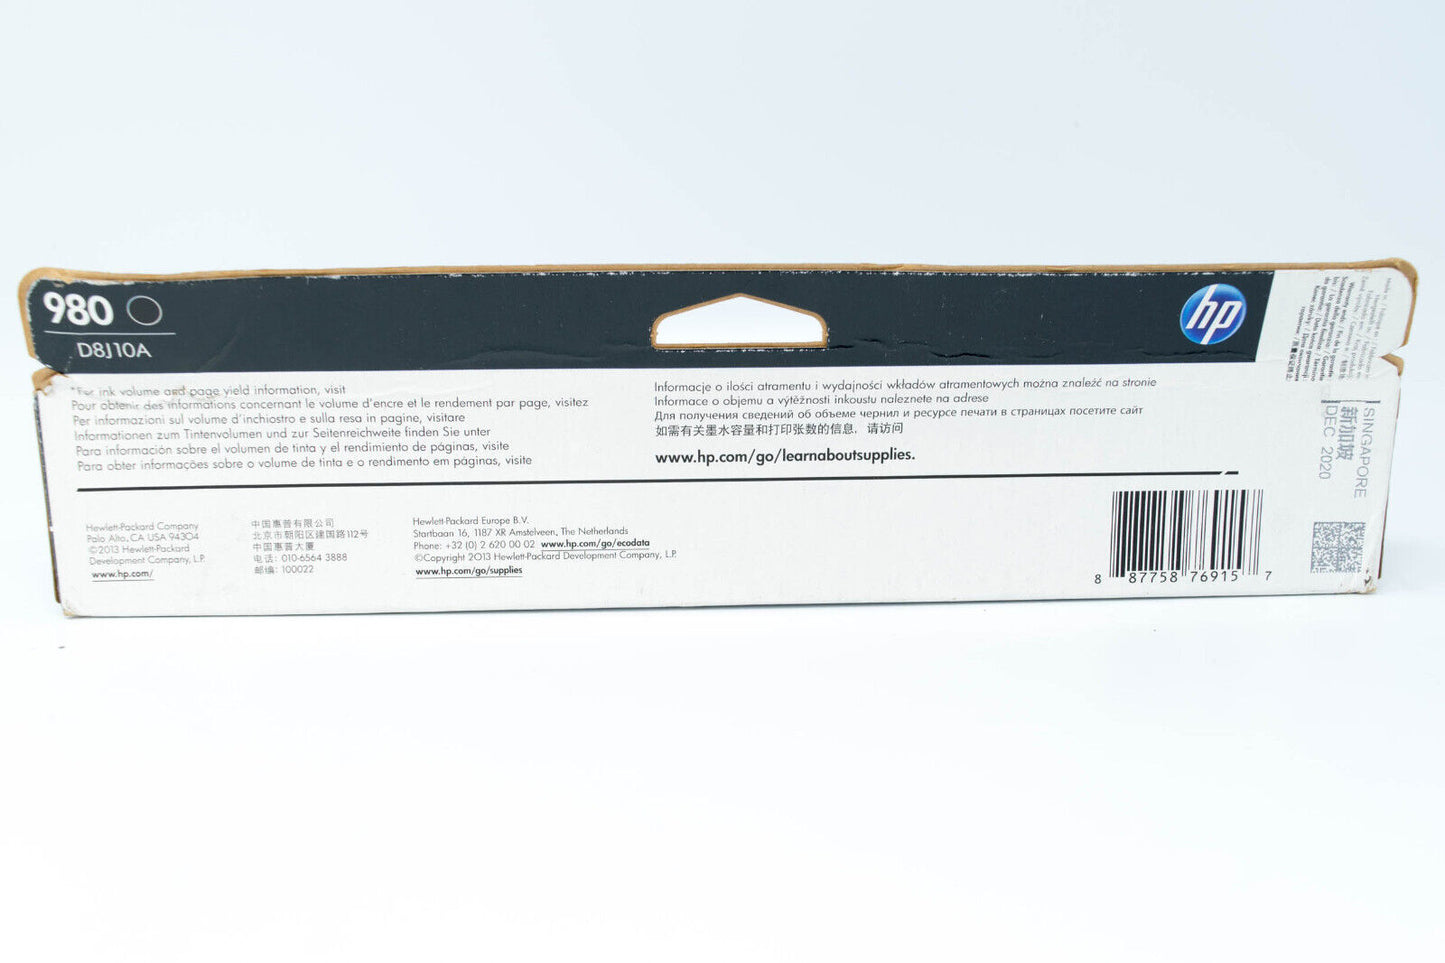 HP 980 - Original PageWide Cartridge Black (DBJ10A) -EXP 12/20- NEW